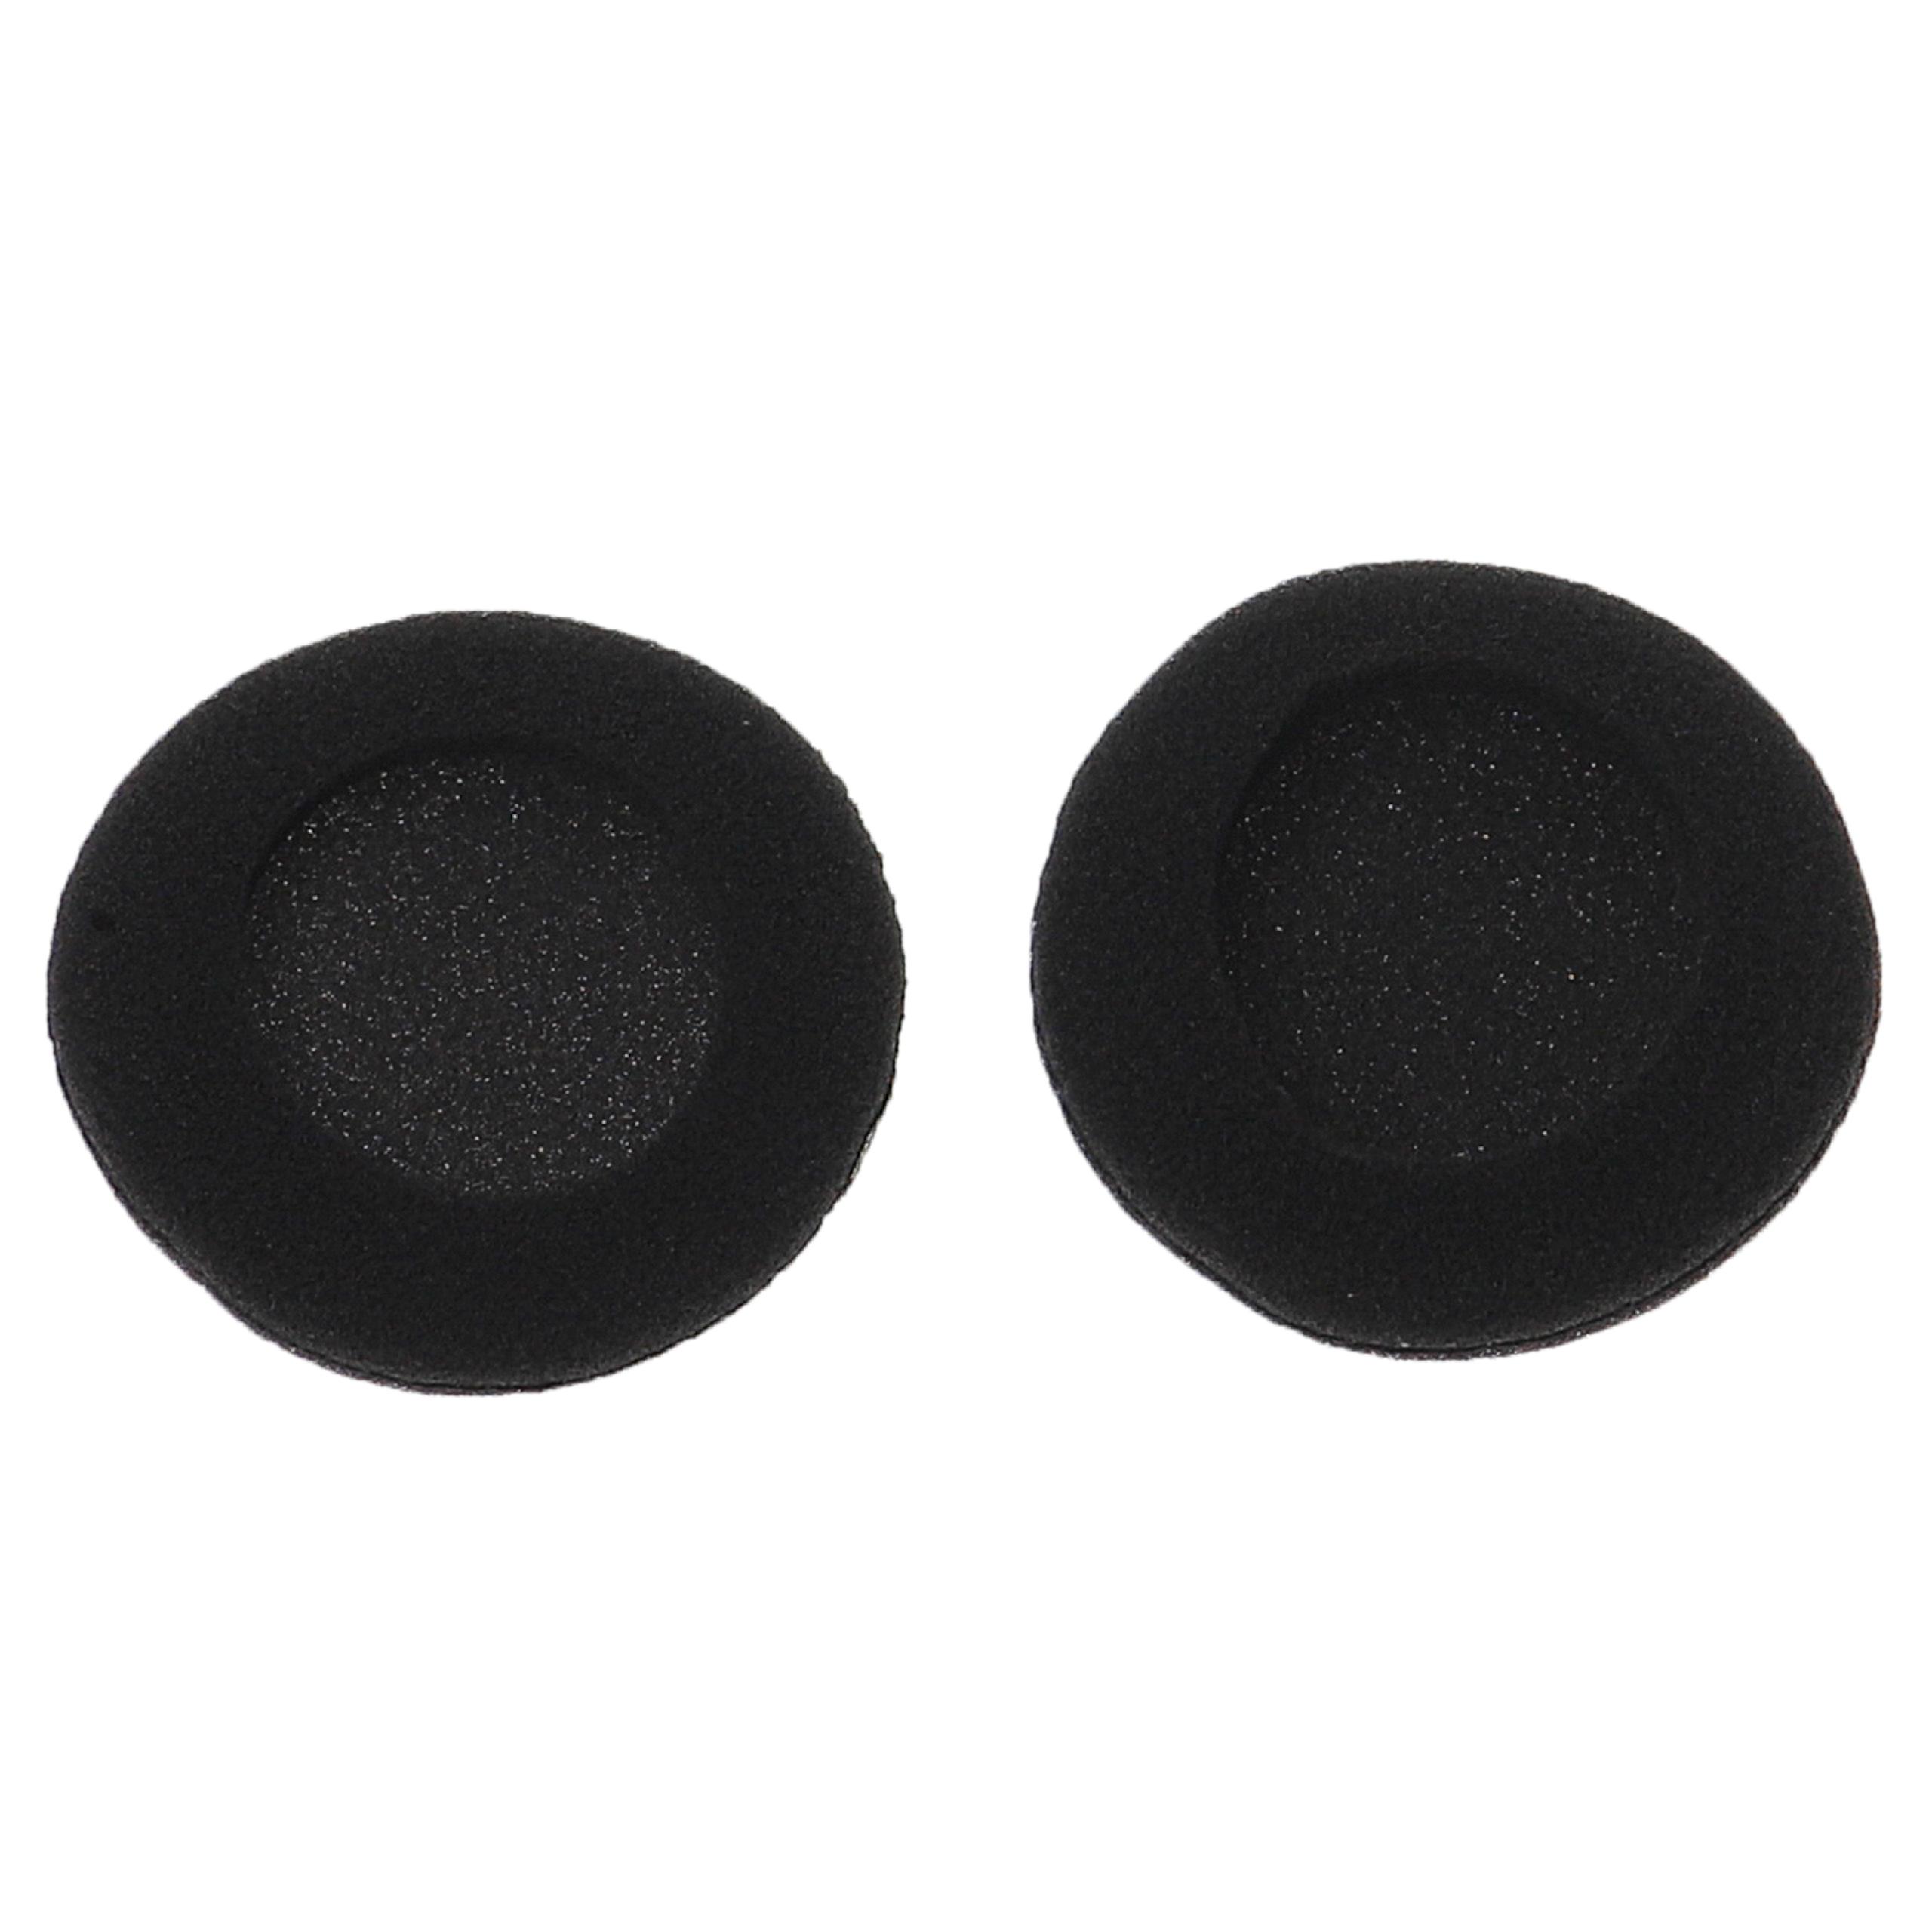 Ear Pads suitable for Koss Porta Pro Headphones etc. - foam, 4.8 cm External Diameter